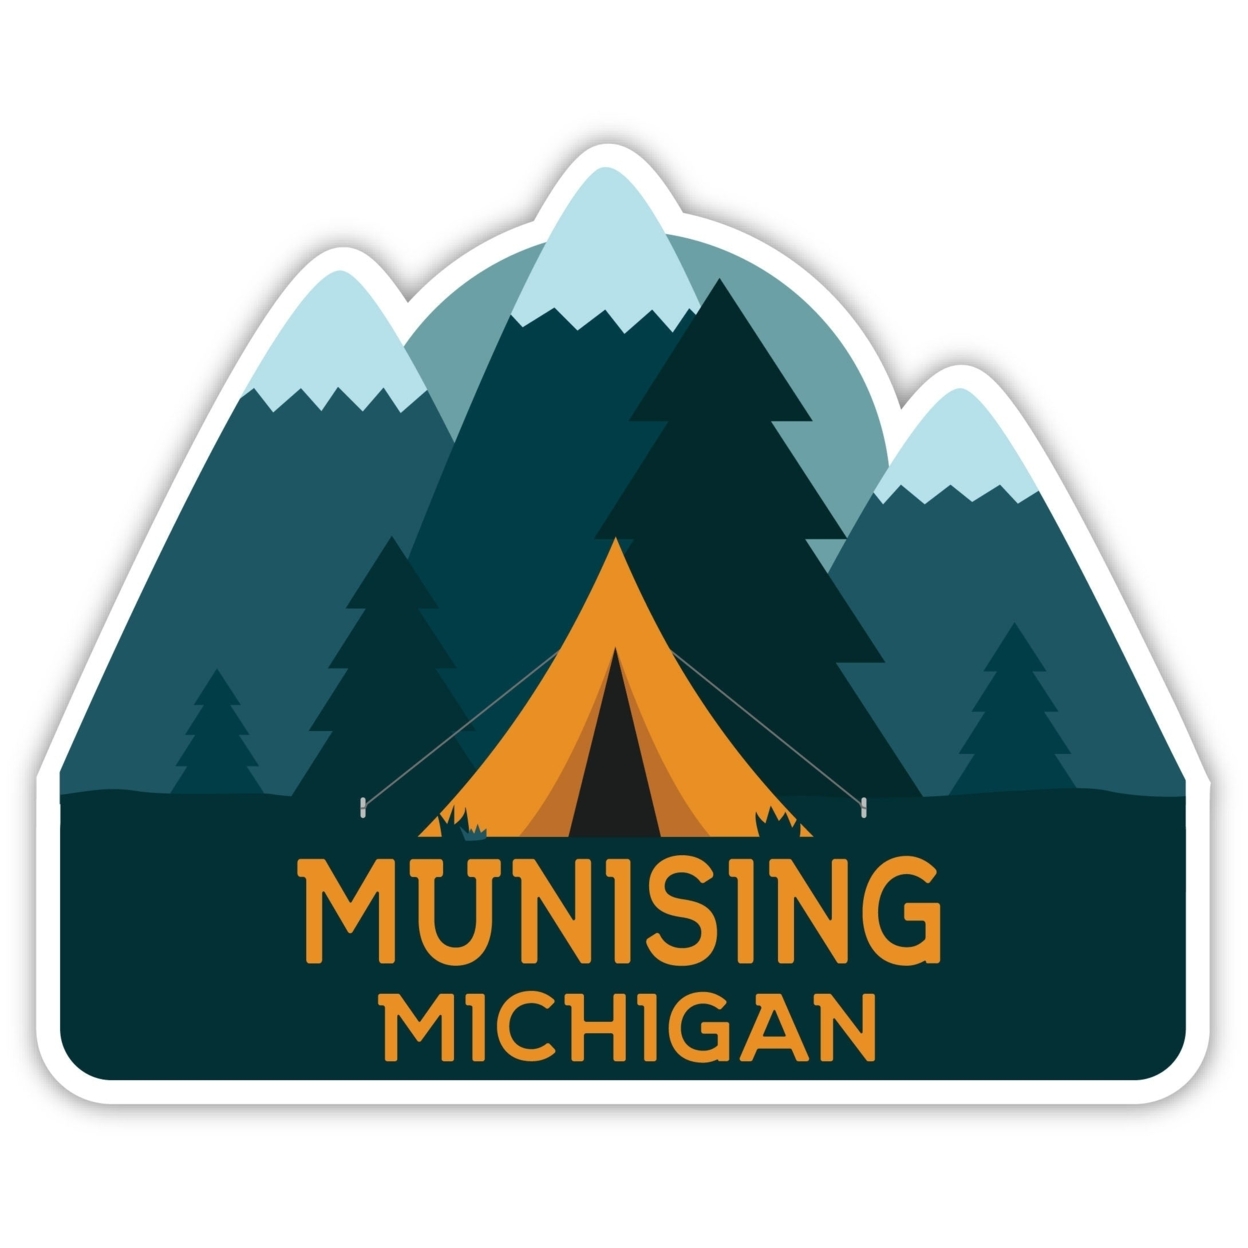 Munising Michigan Souvenir Decorative Stickers (Choose Theme And Size) - Single Unit, 4-Inch, Adventures Awaits